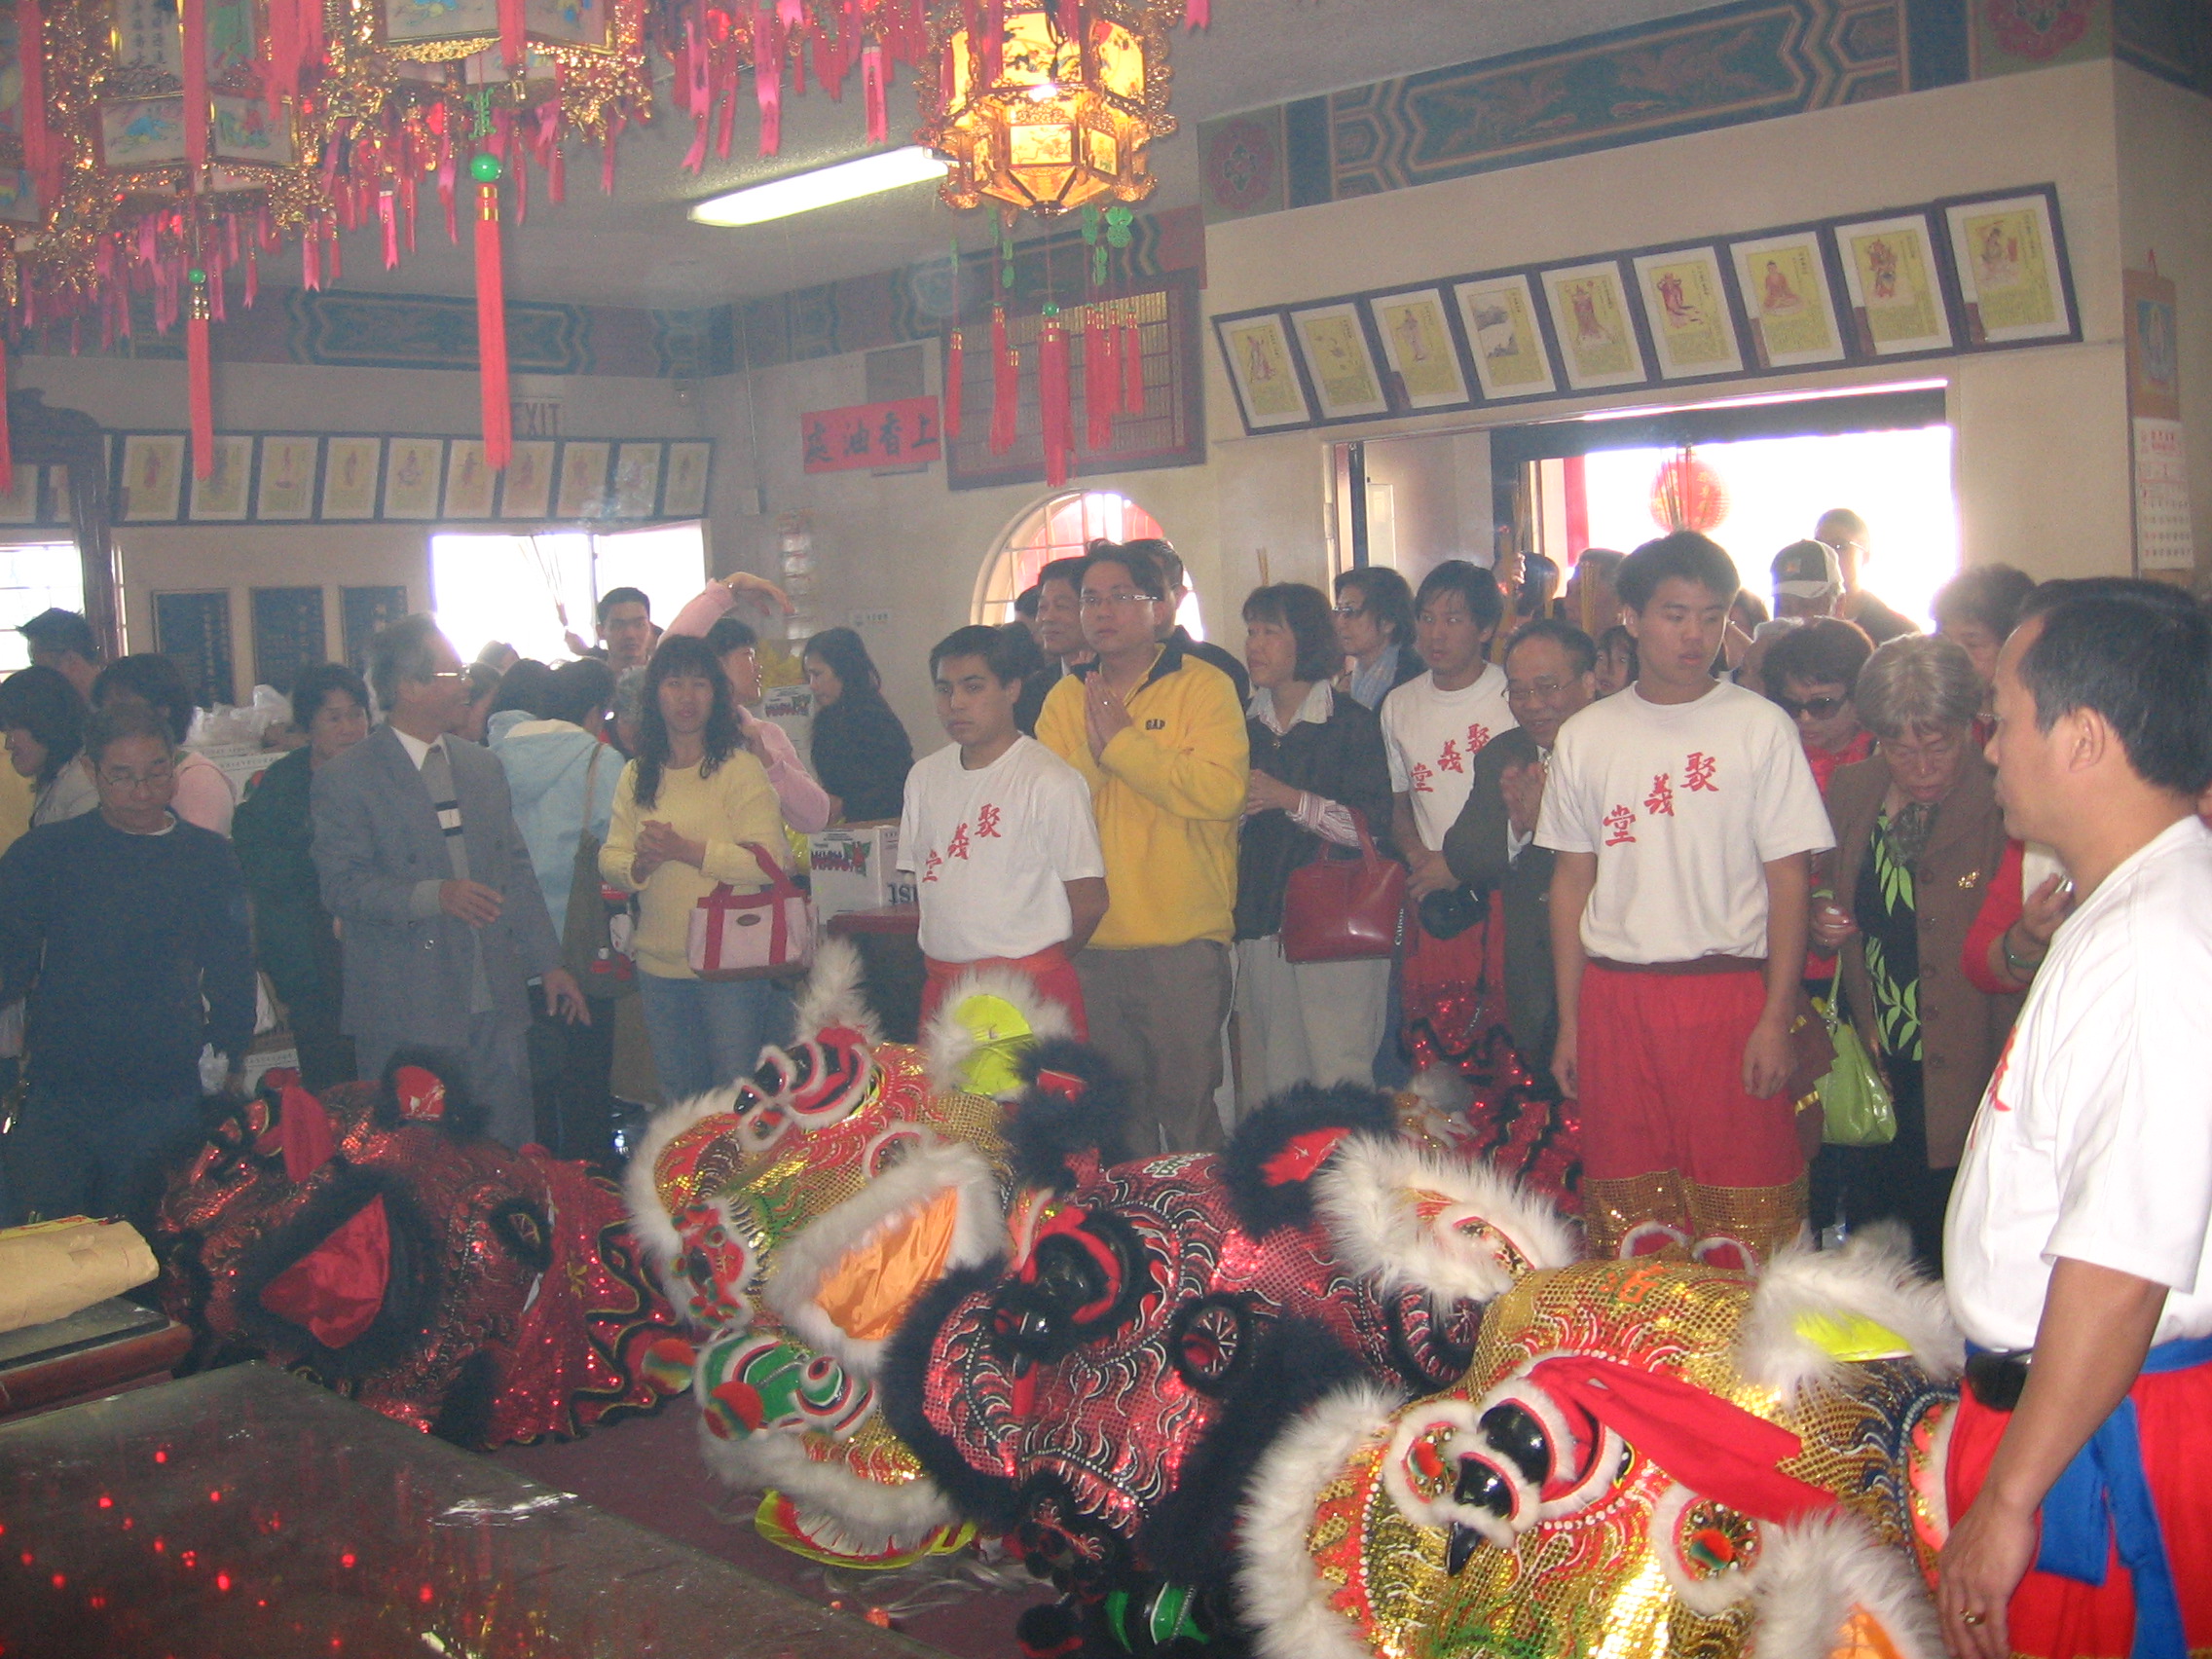 Festivities | Sarawakfestival's Blog